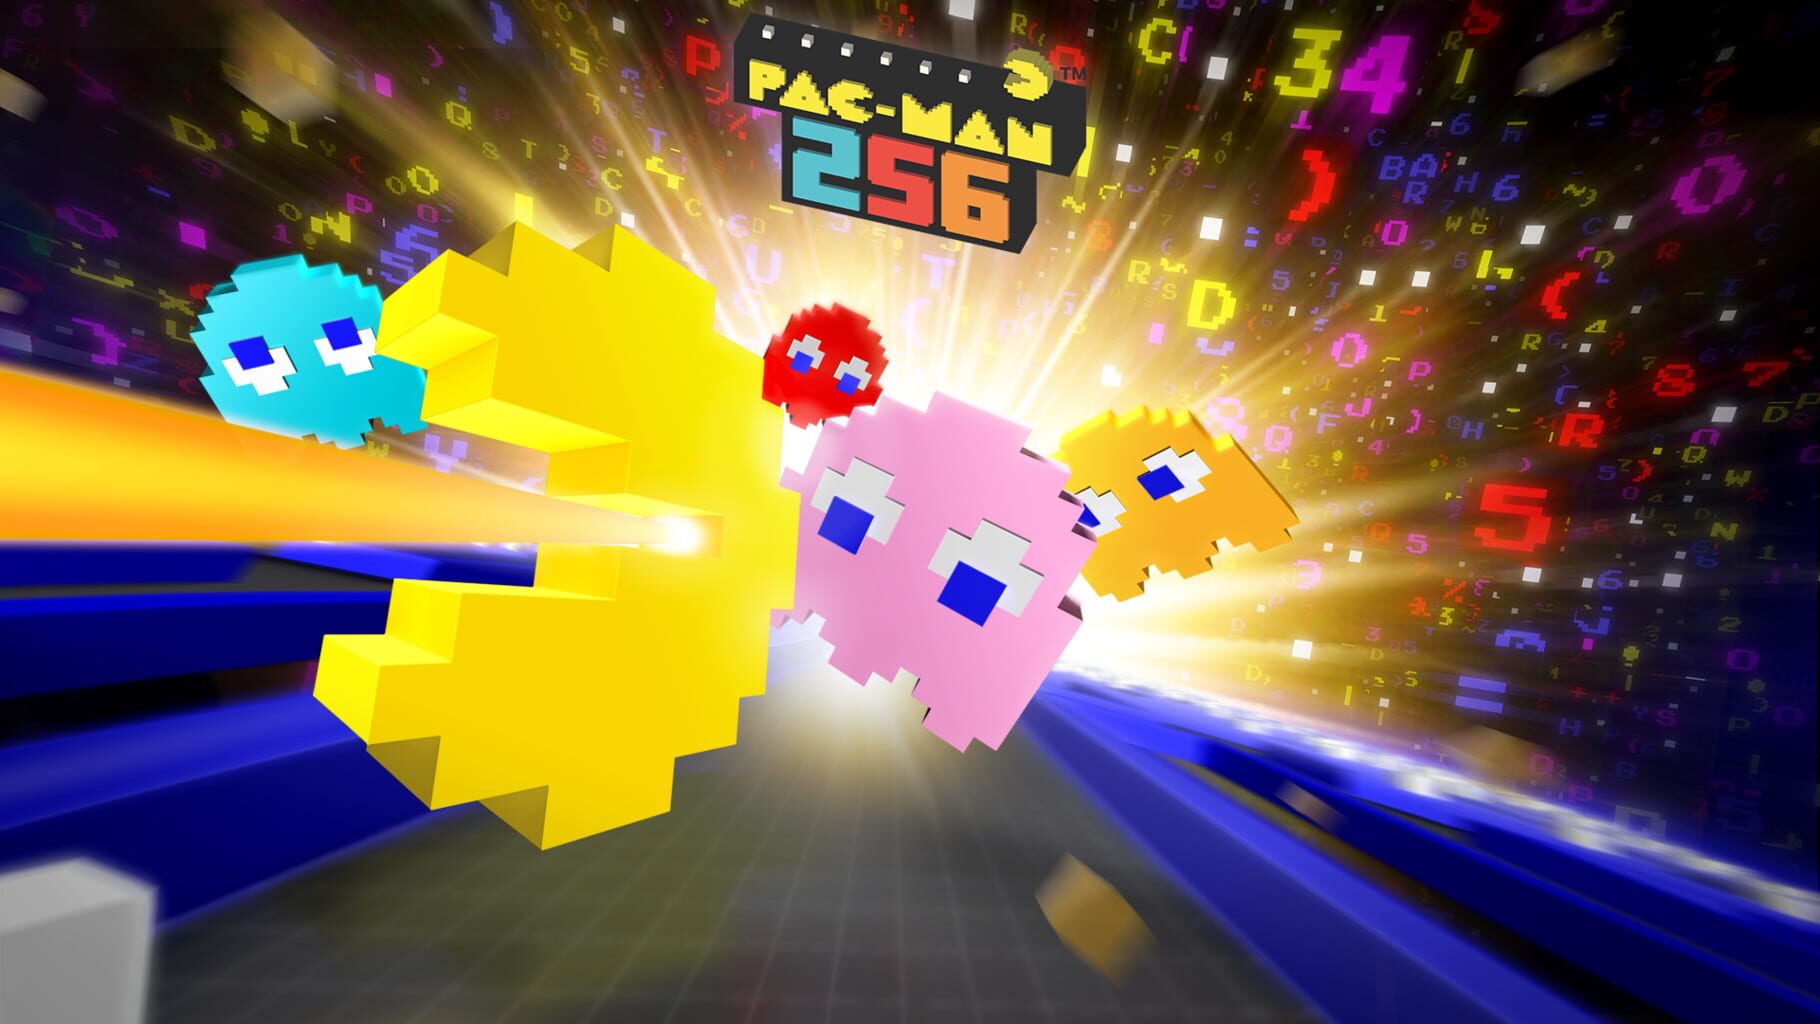 Artwork for Pac-Man 256